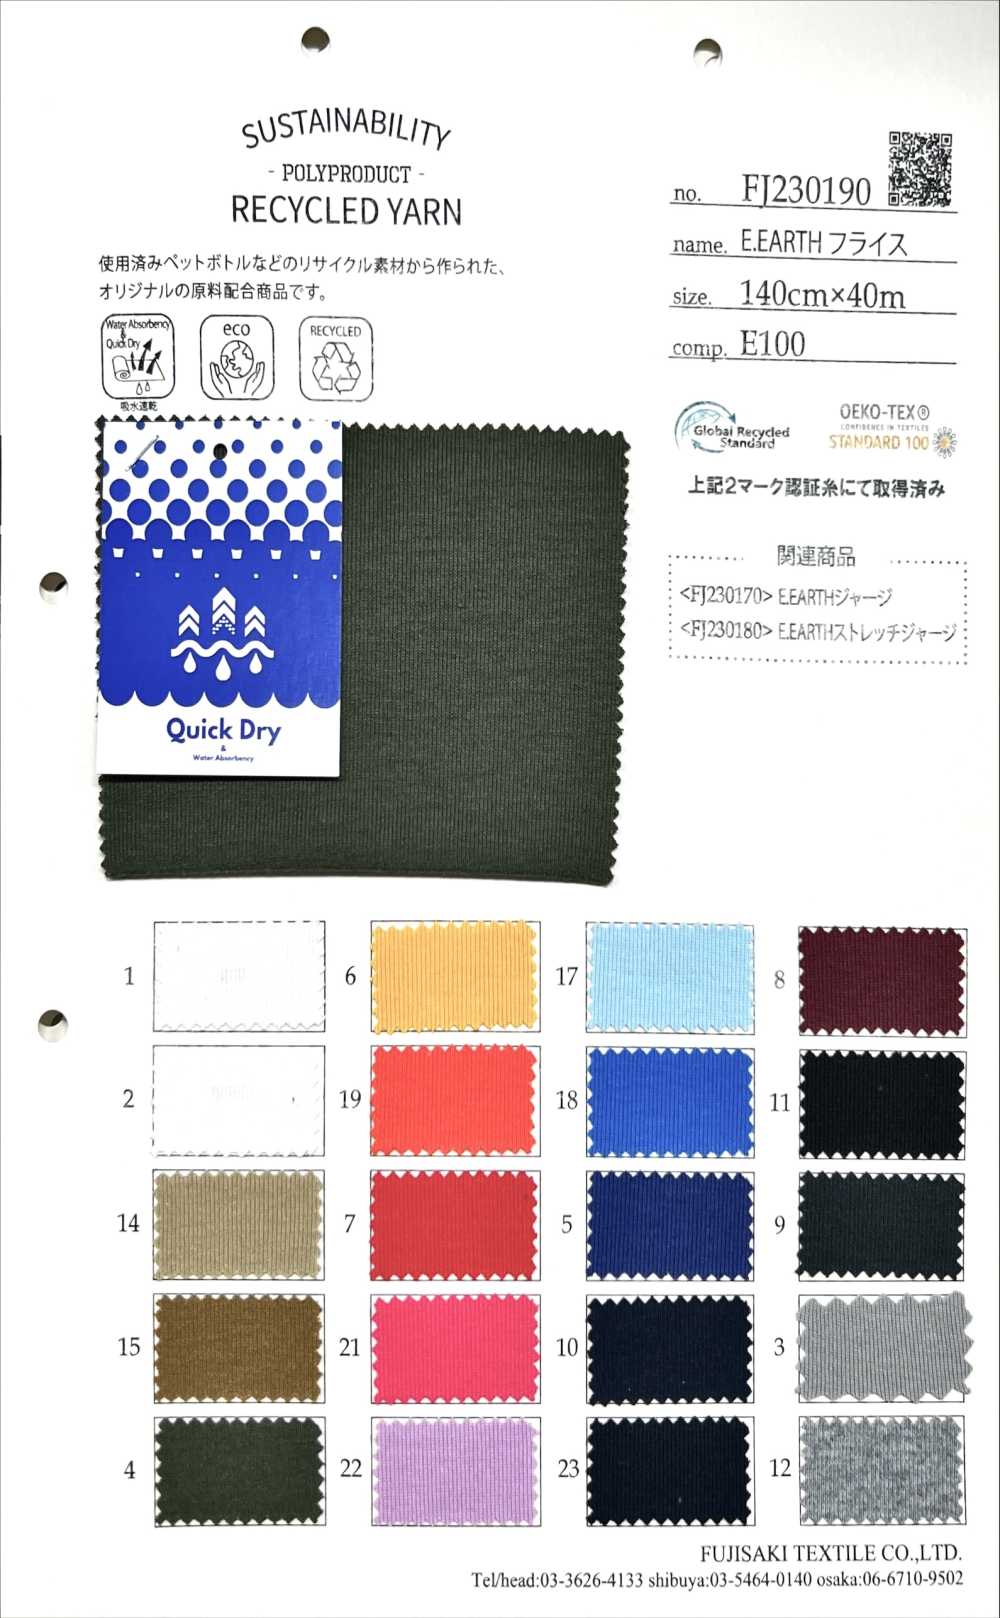 FJ230190 E.EARTH 후라이스[원단] Fujisaki Textile